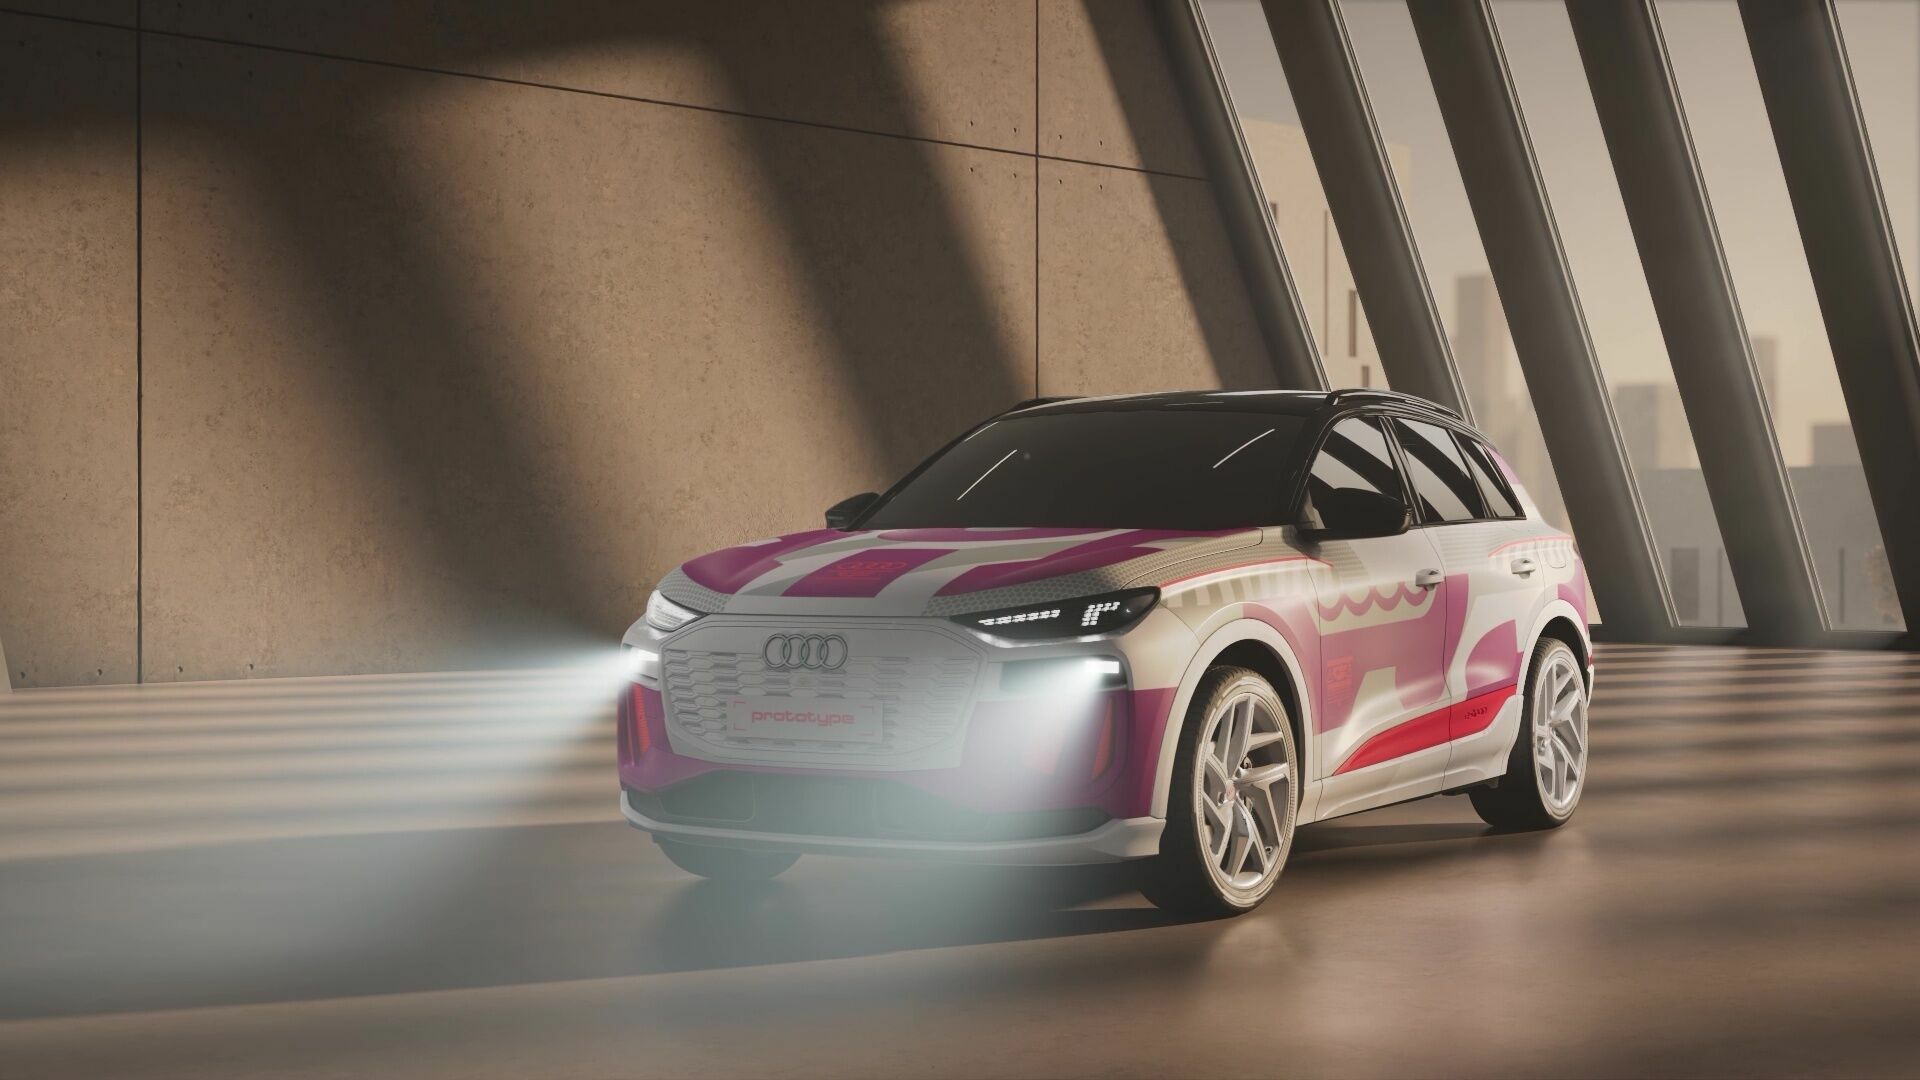 Audi Q6 e-tron prototype – Digital light signature and Matrix LED headlights – Animation